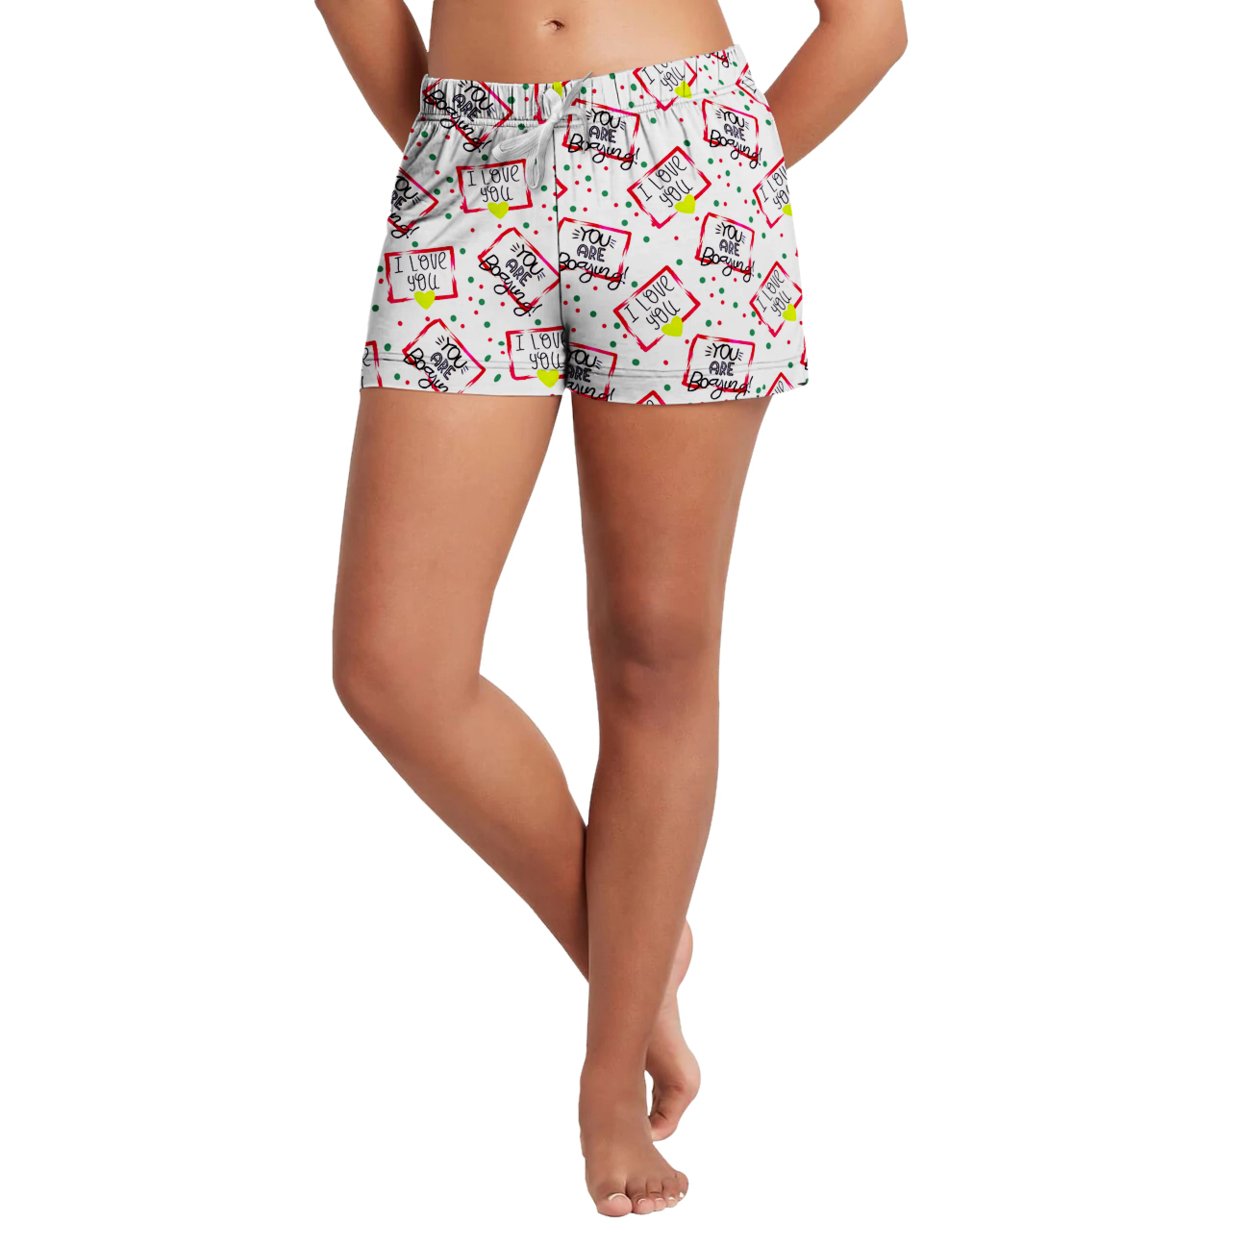 5-Pack Women's Lounge PJ Bottom Pajama Shorts Soft Cozy Ladies Drawstring Pant - S